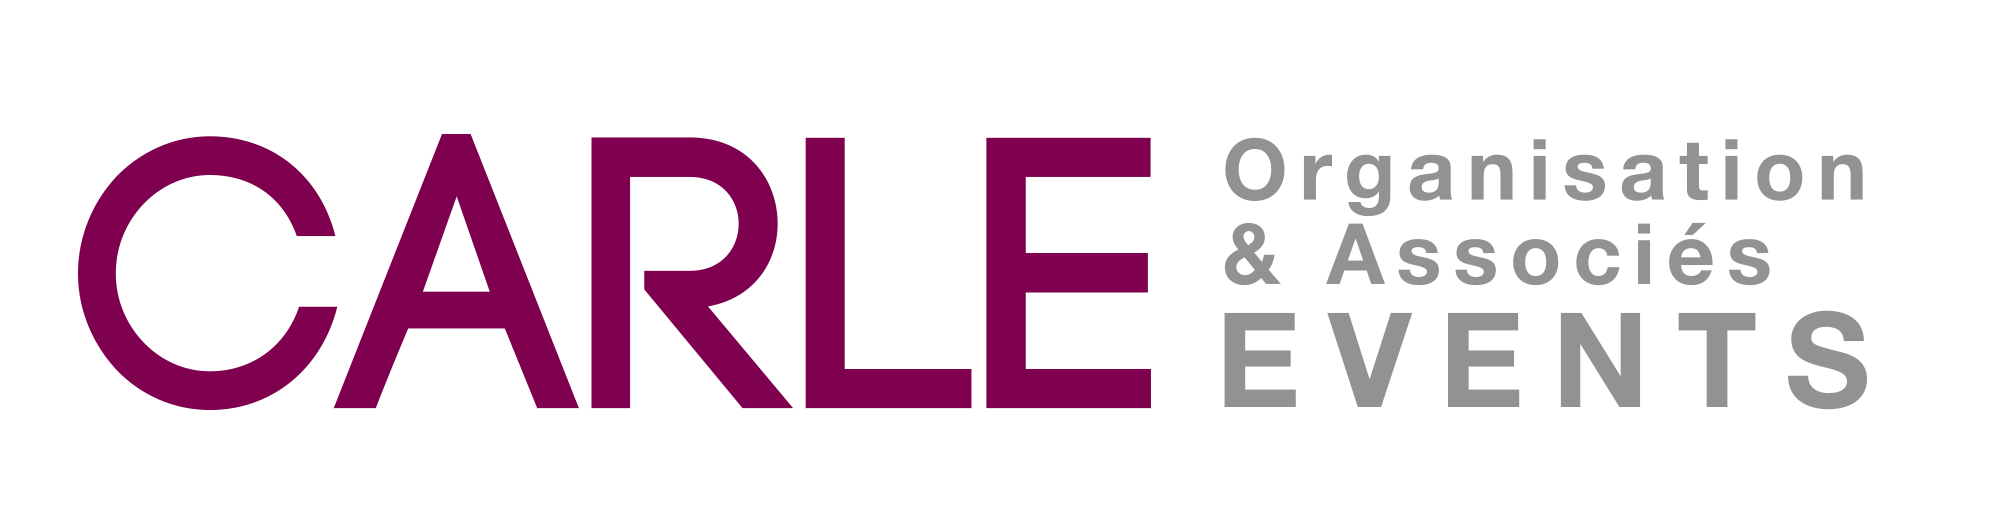 Carle Logo - Home - Carle Organisation